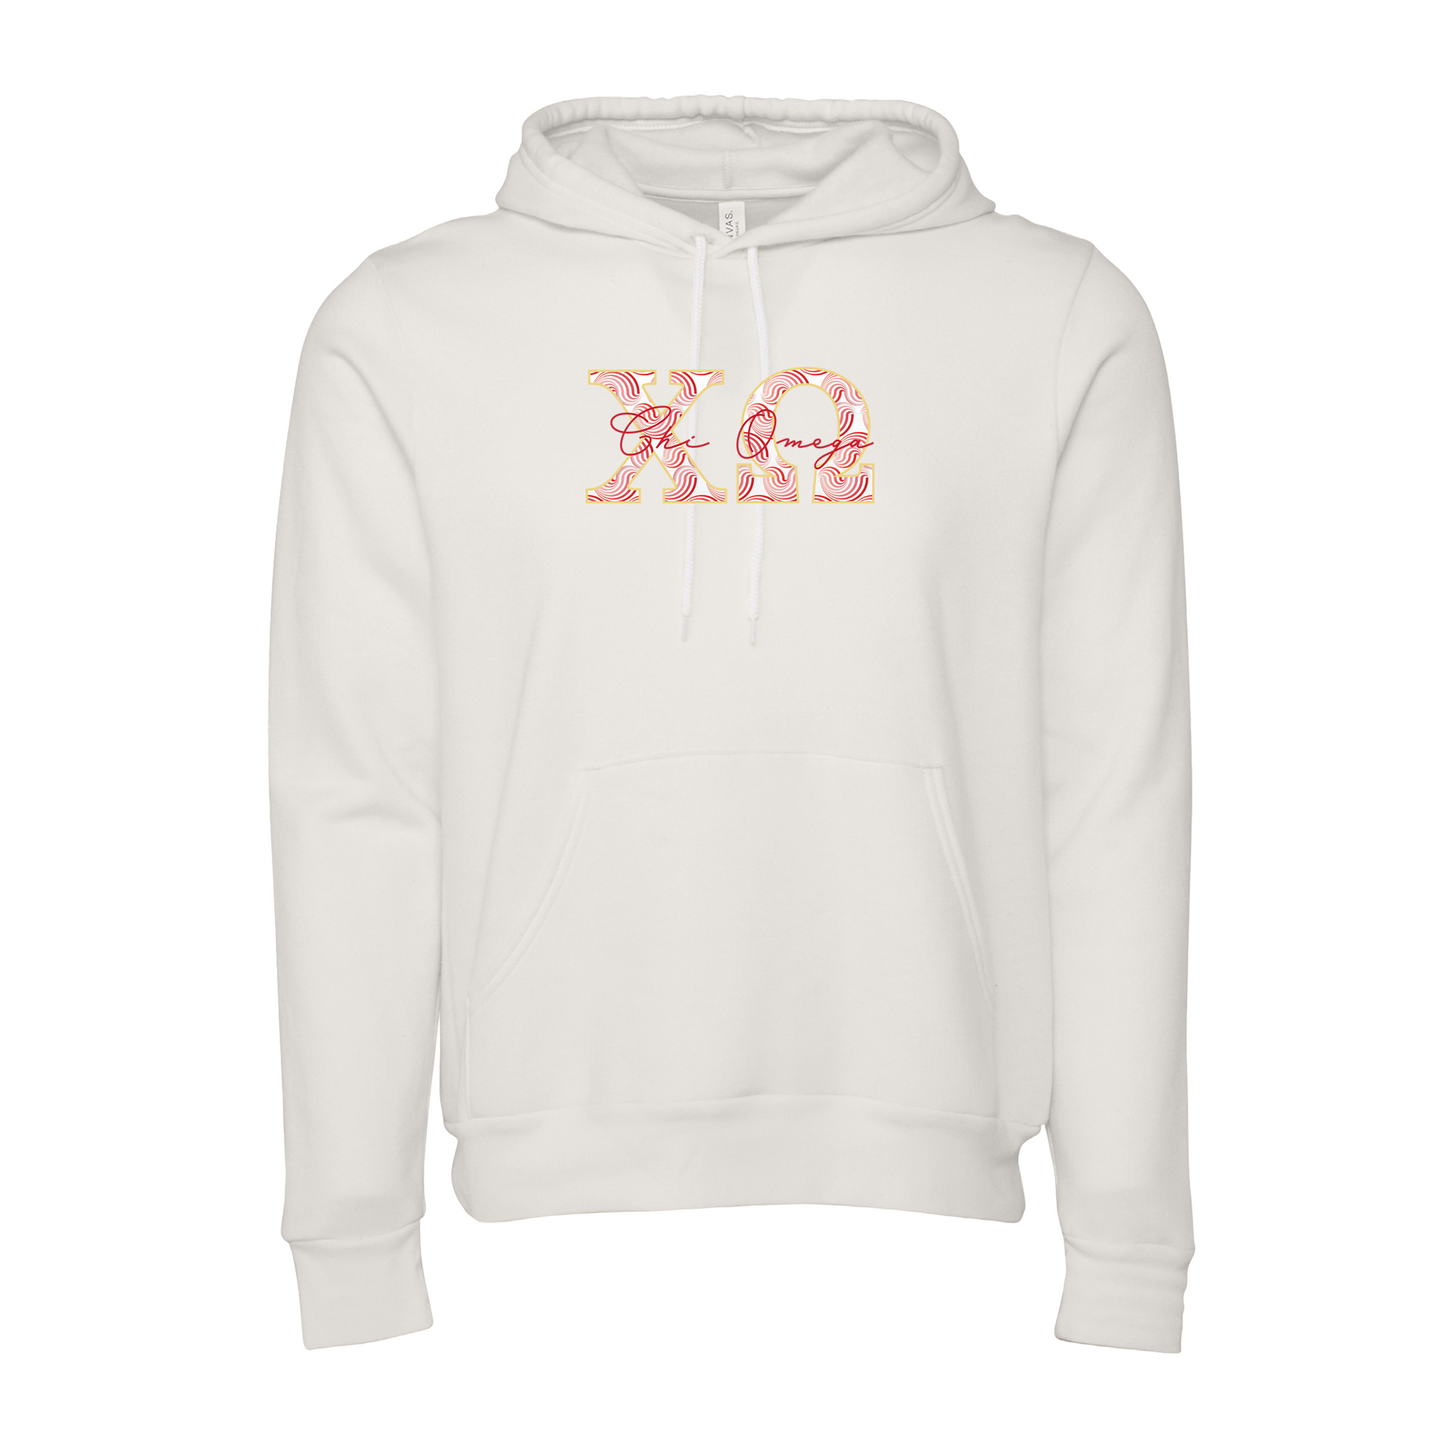 Chi Omega Applique Letters Hooded Sweatshirt